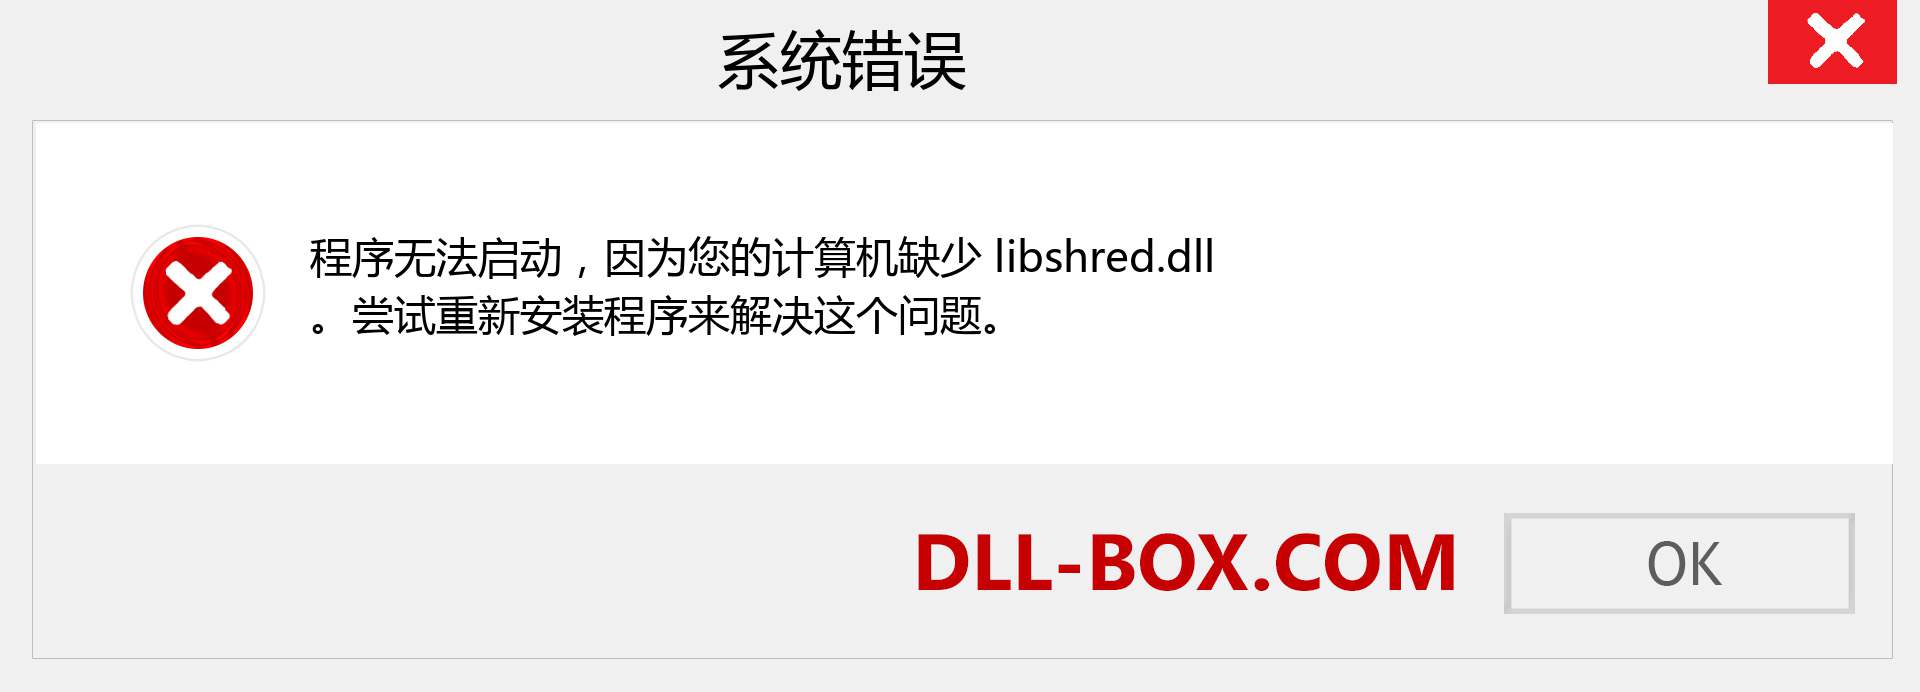 libshred.dll 文件丢失？。 适用于 Windows 7、8、10 的下载 - 修复 Windows、照片、图像上的 libshred dll 丢失错误